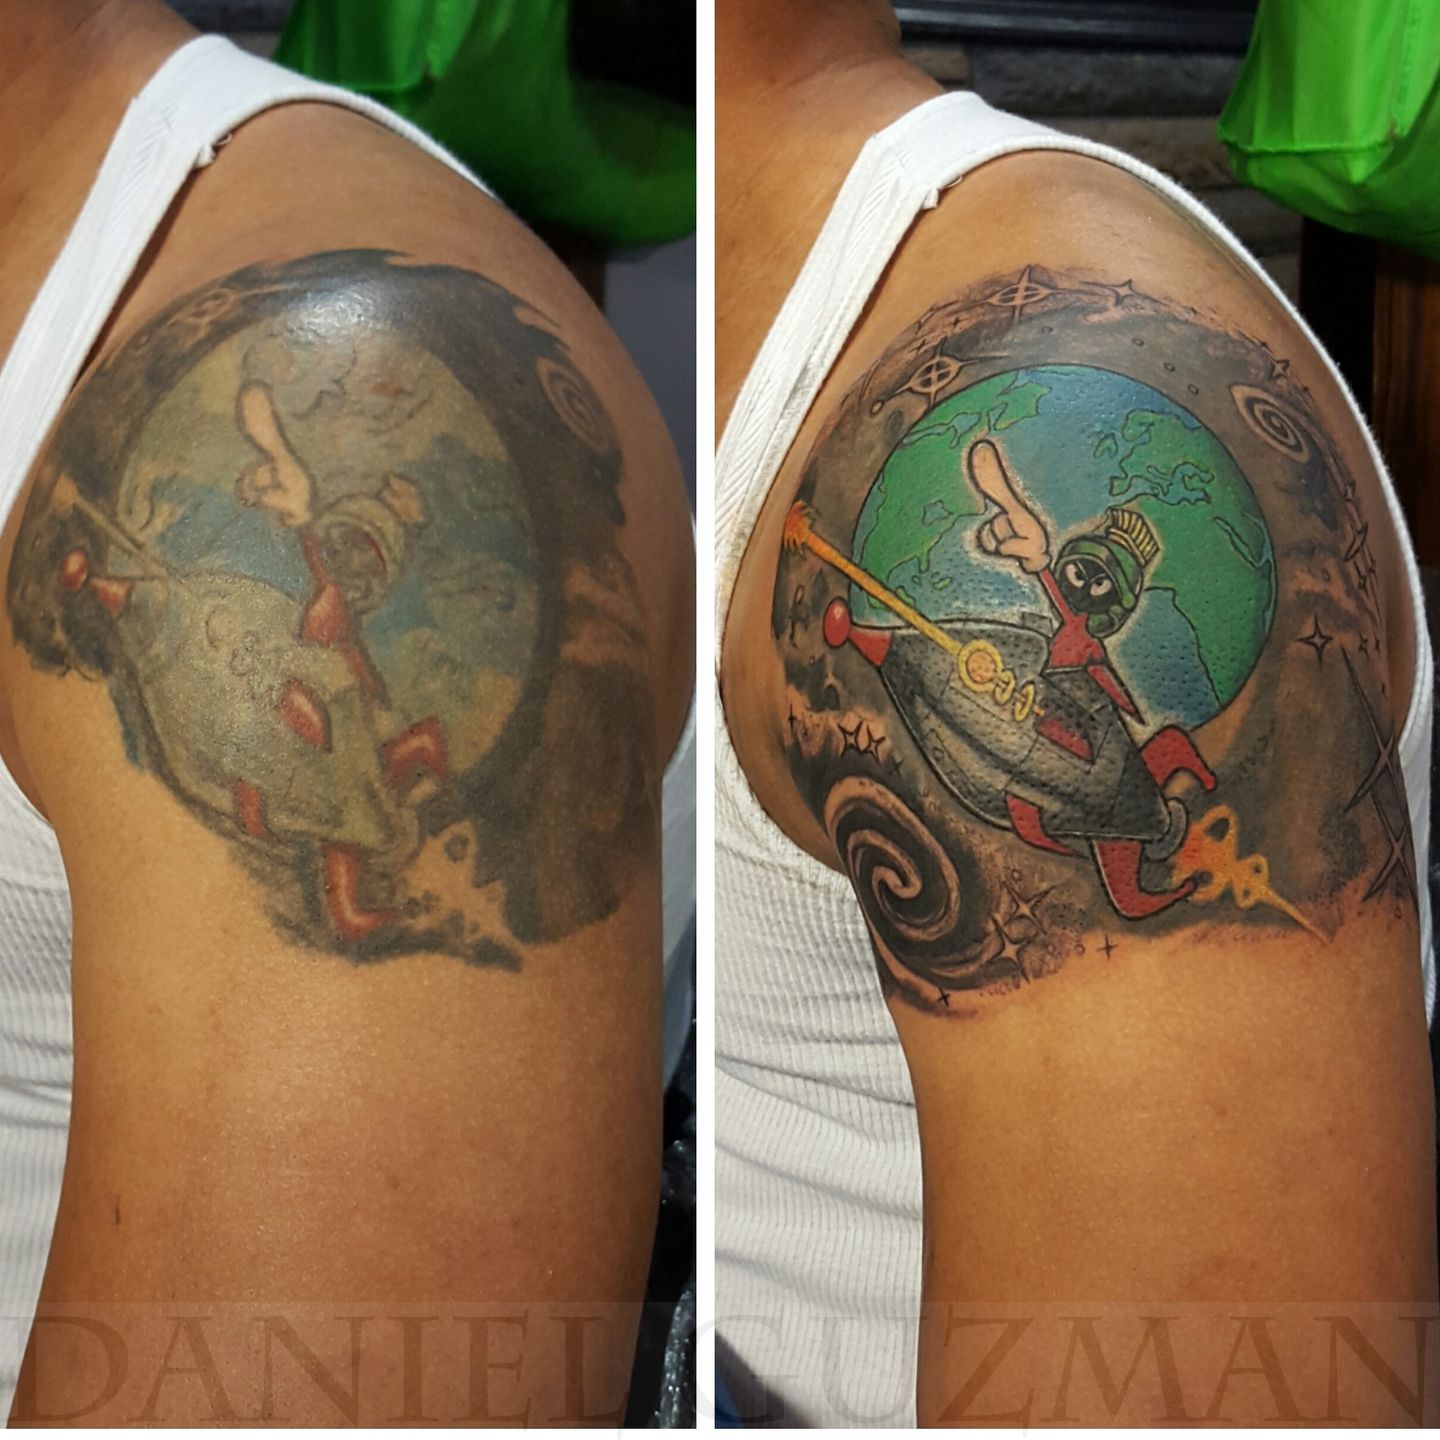 Vants Tattoo Studio  Marvin The Martian Tattoo marvinthemartian  tattooartist  Facebook